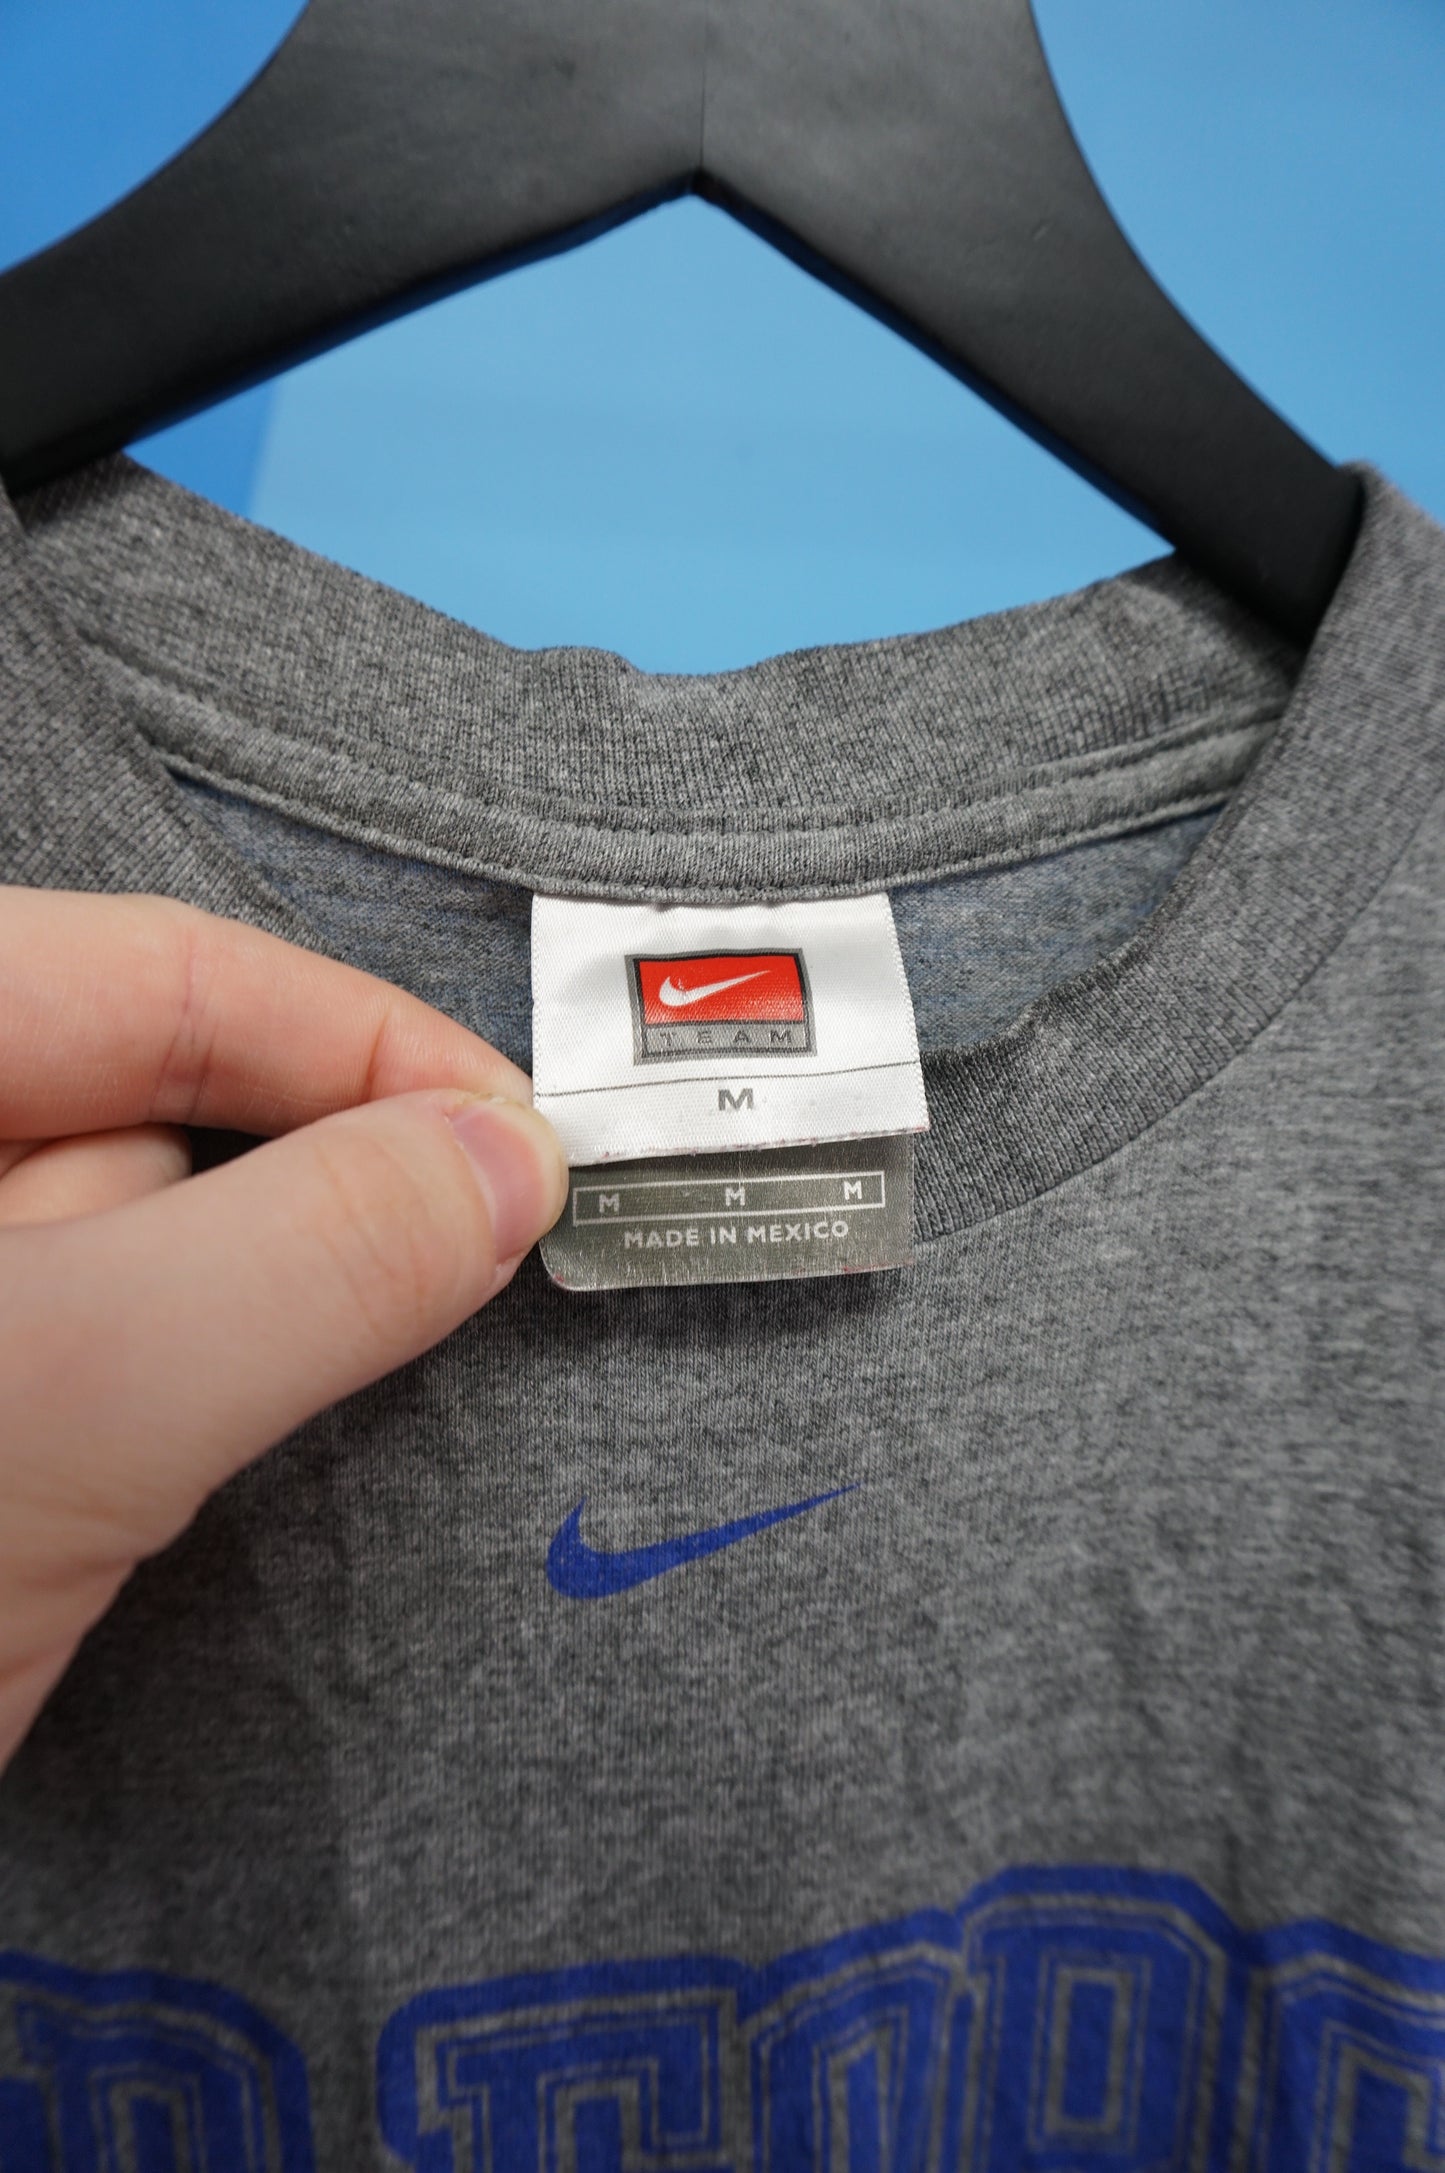 (M) Nike Air Force Football T-Shirt